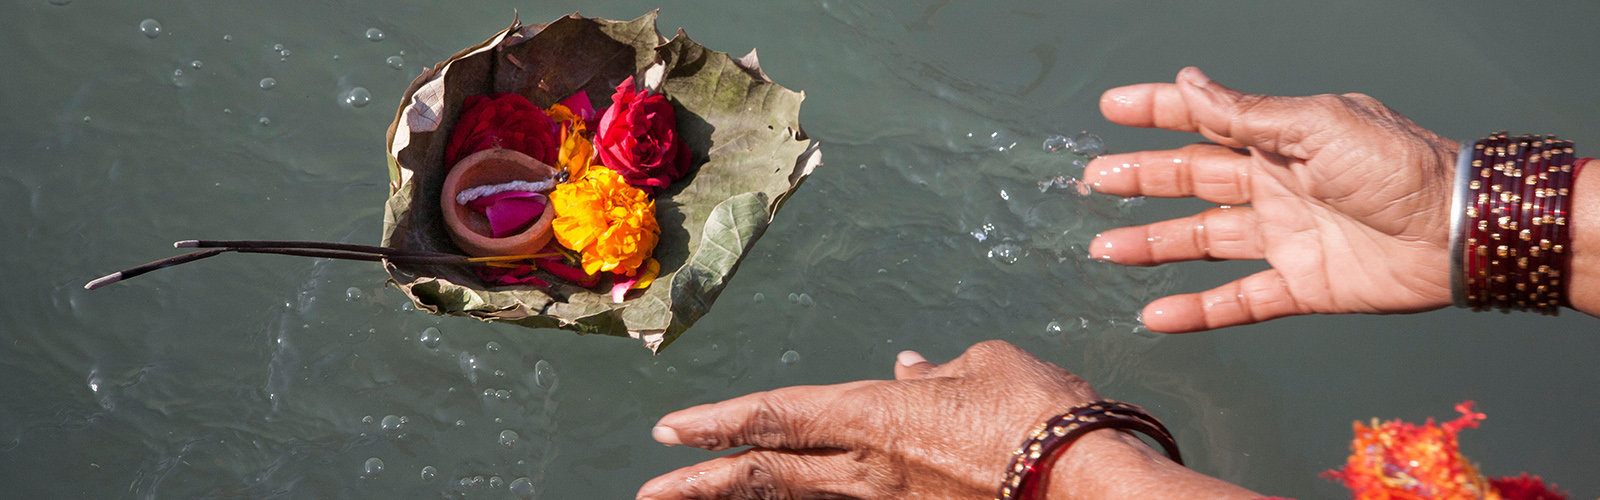 Offrande au Gange durant le pèlerinage de la Kumbh Mela, en Inde en 2010. | © Imageselect
